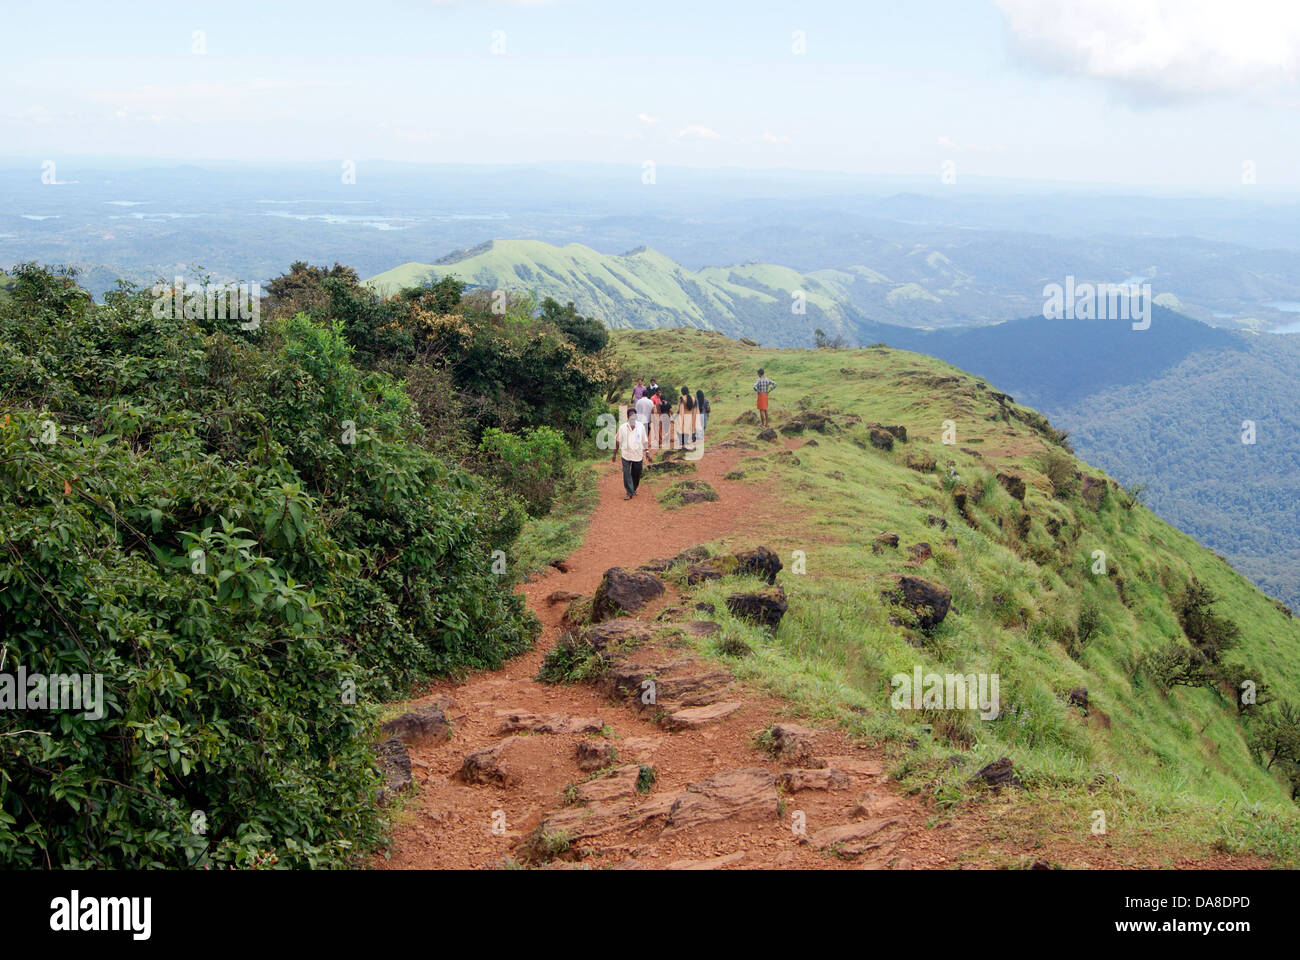 Western ghats India Mountain top and Pilgrims going through Lush Green Kodachadri Hills to visit Sarvajnapeedam Mandapam Stock Photo